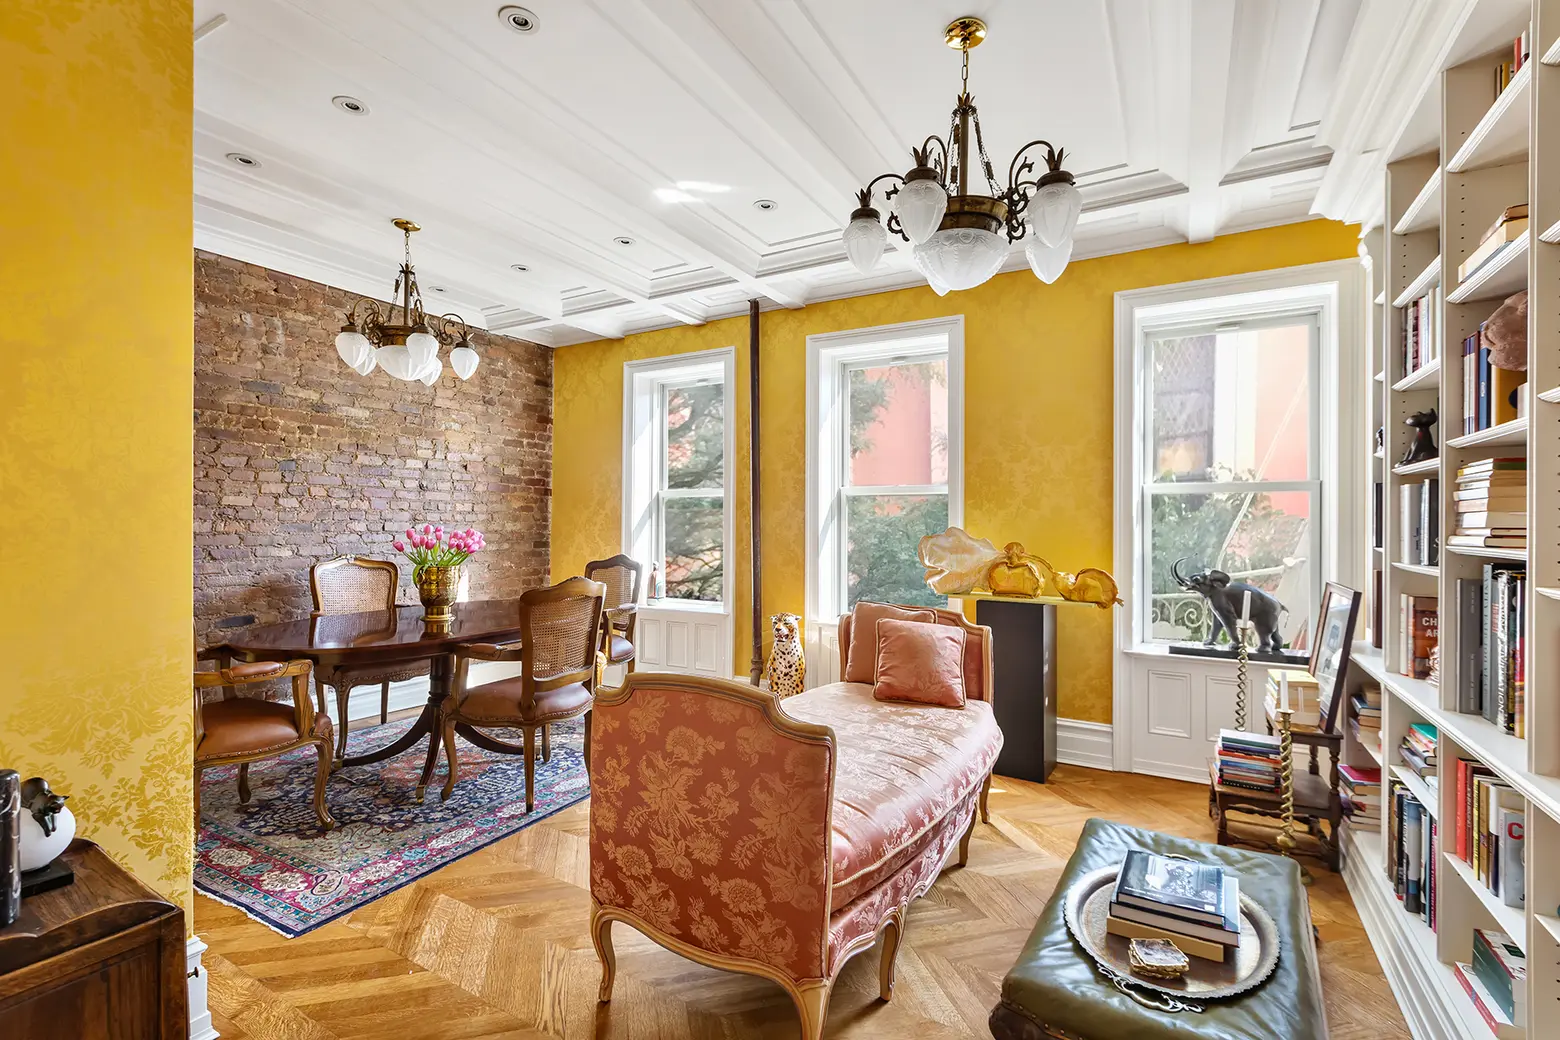 This $2.8M West Village co-op feels like an elegant European salon